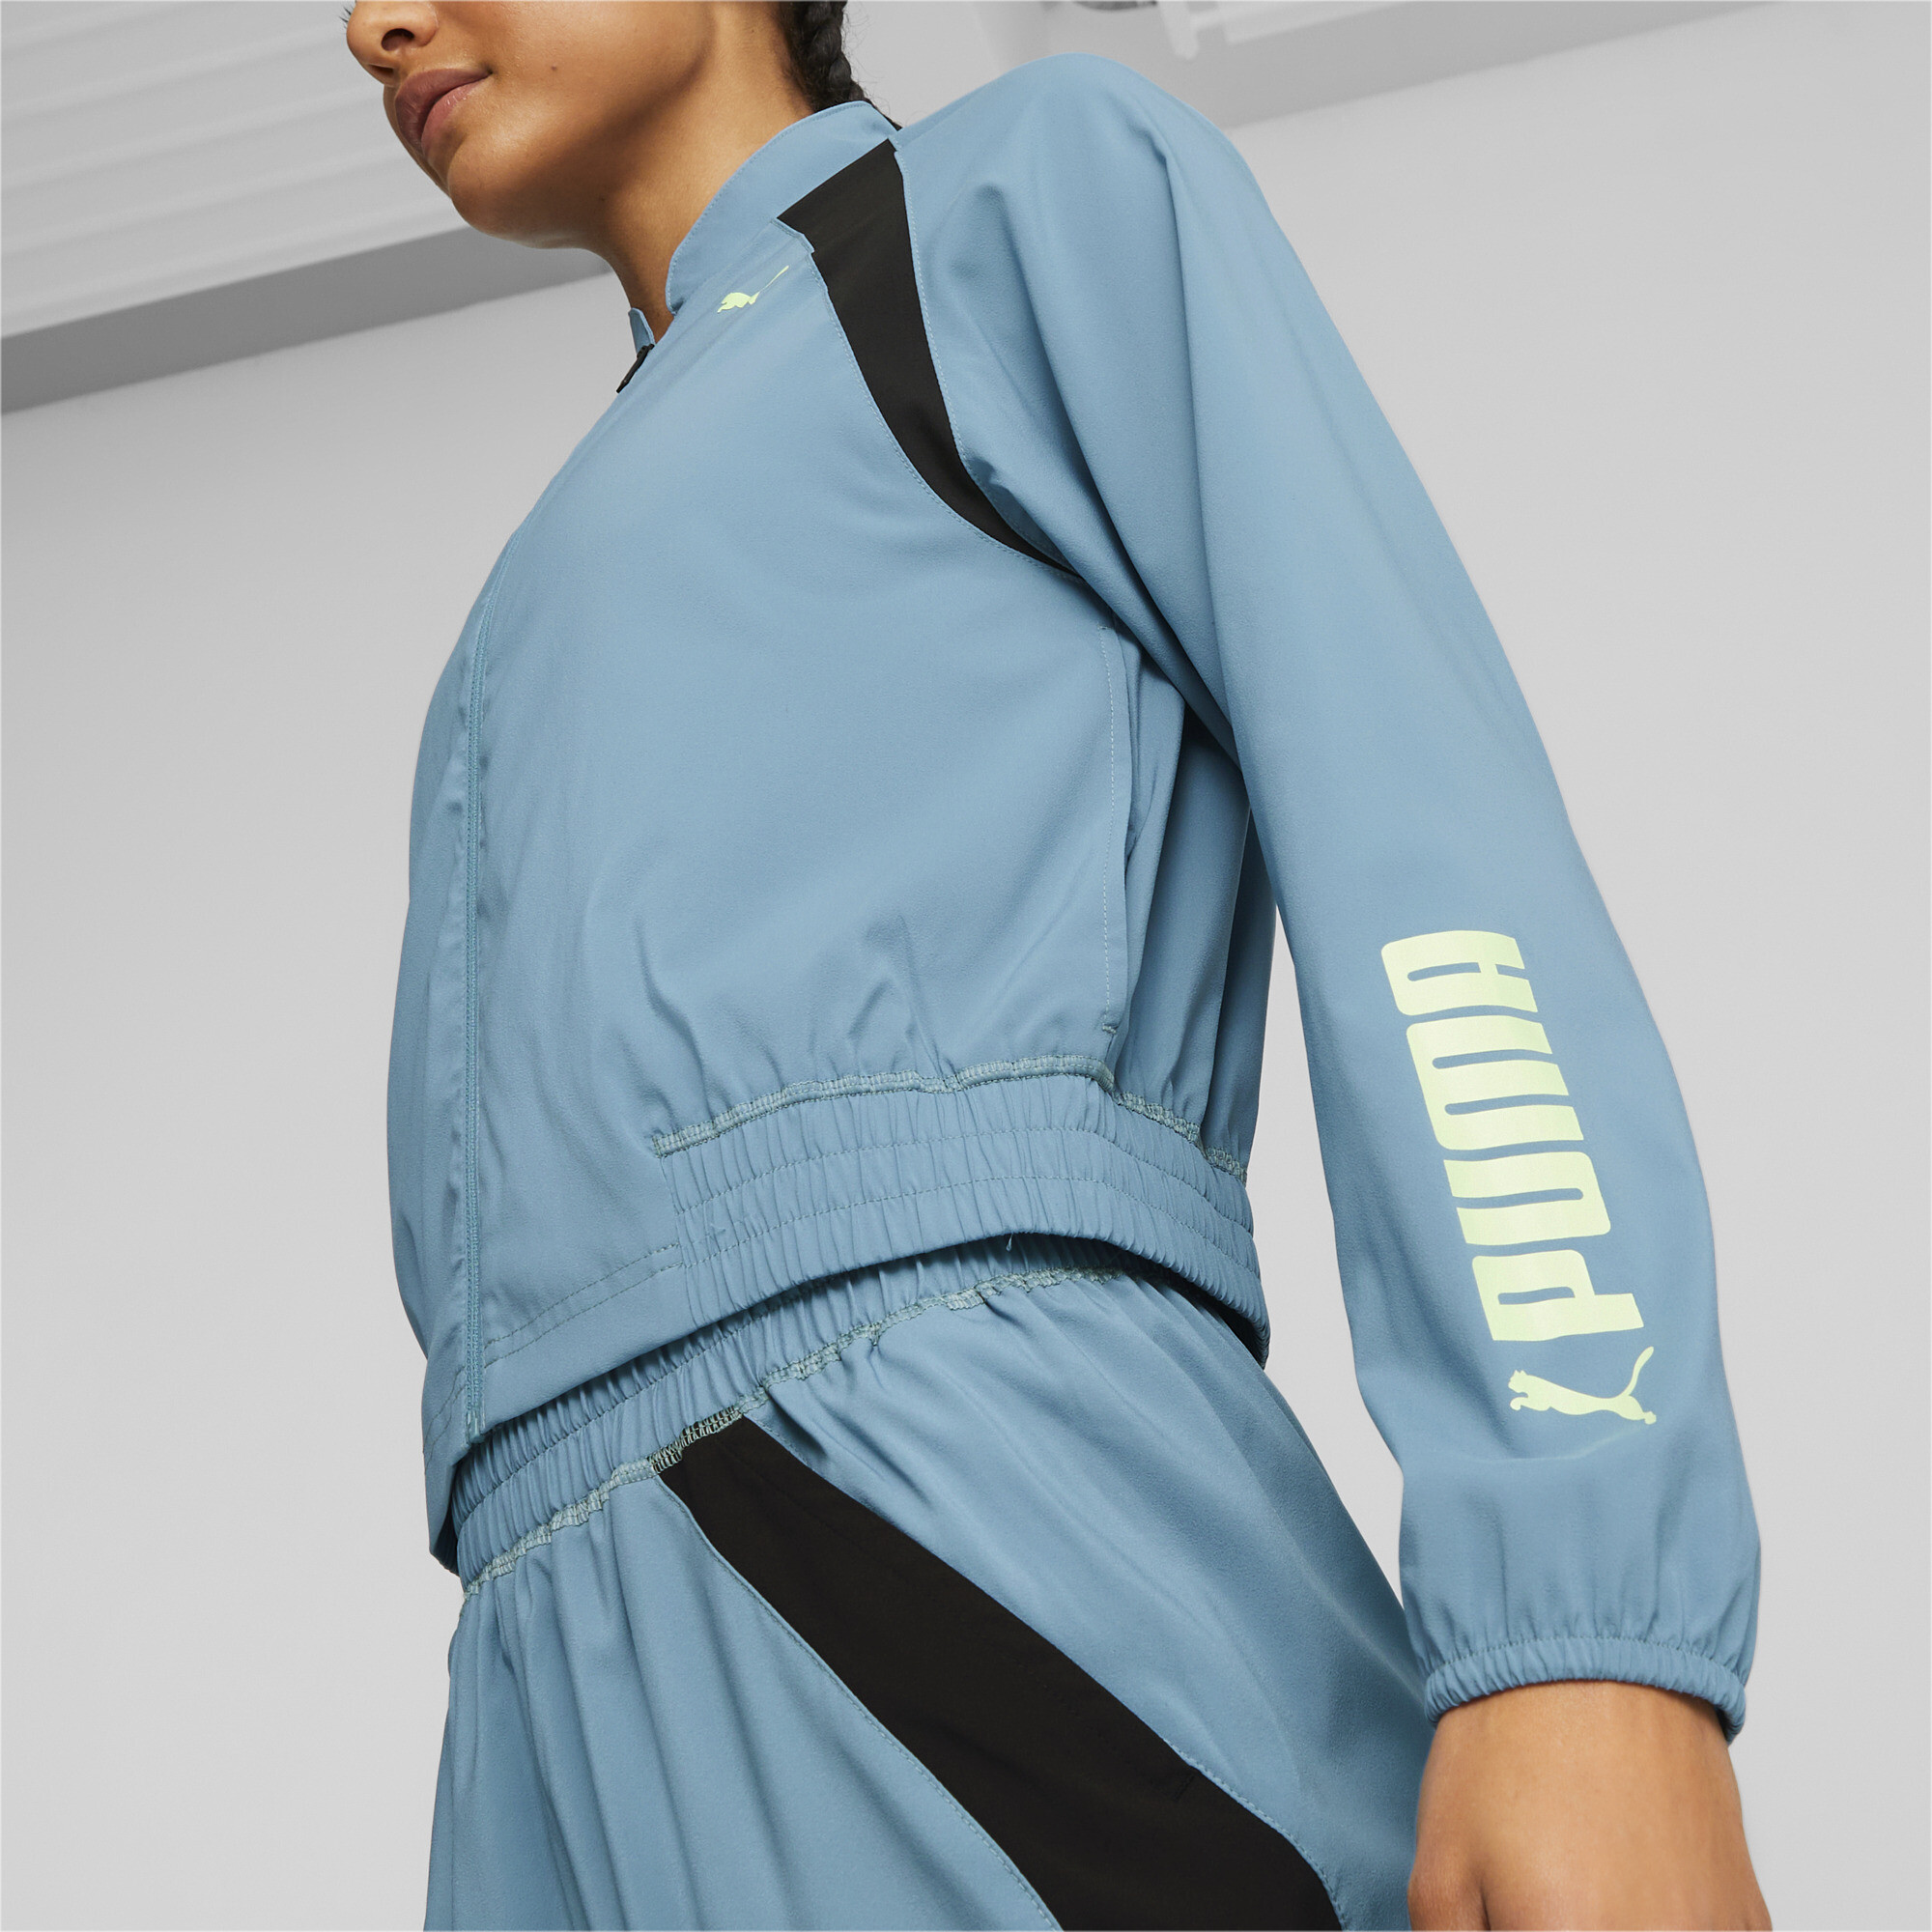 Women's PUMA Fit Training Jacket In Blue, Size Large